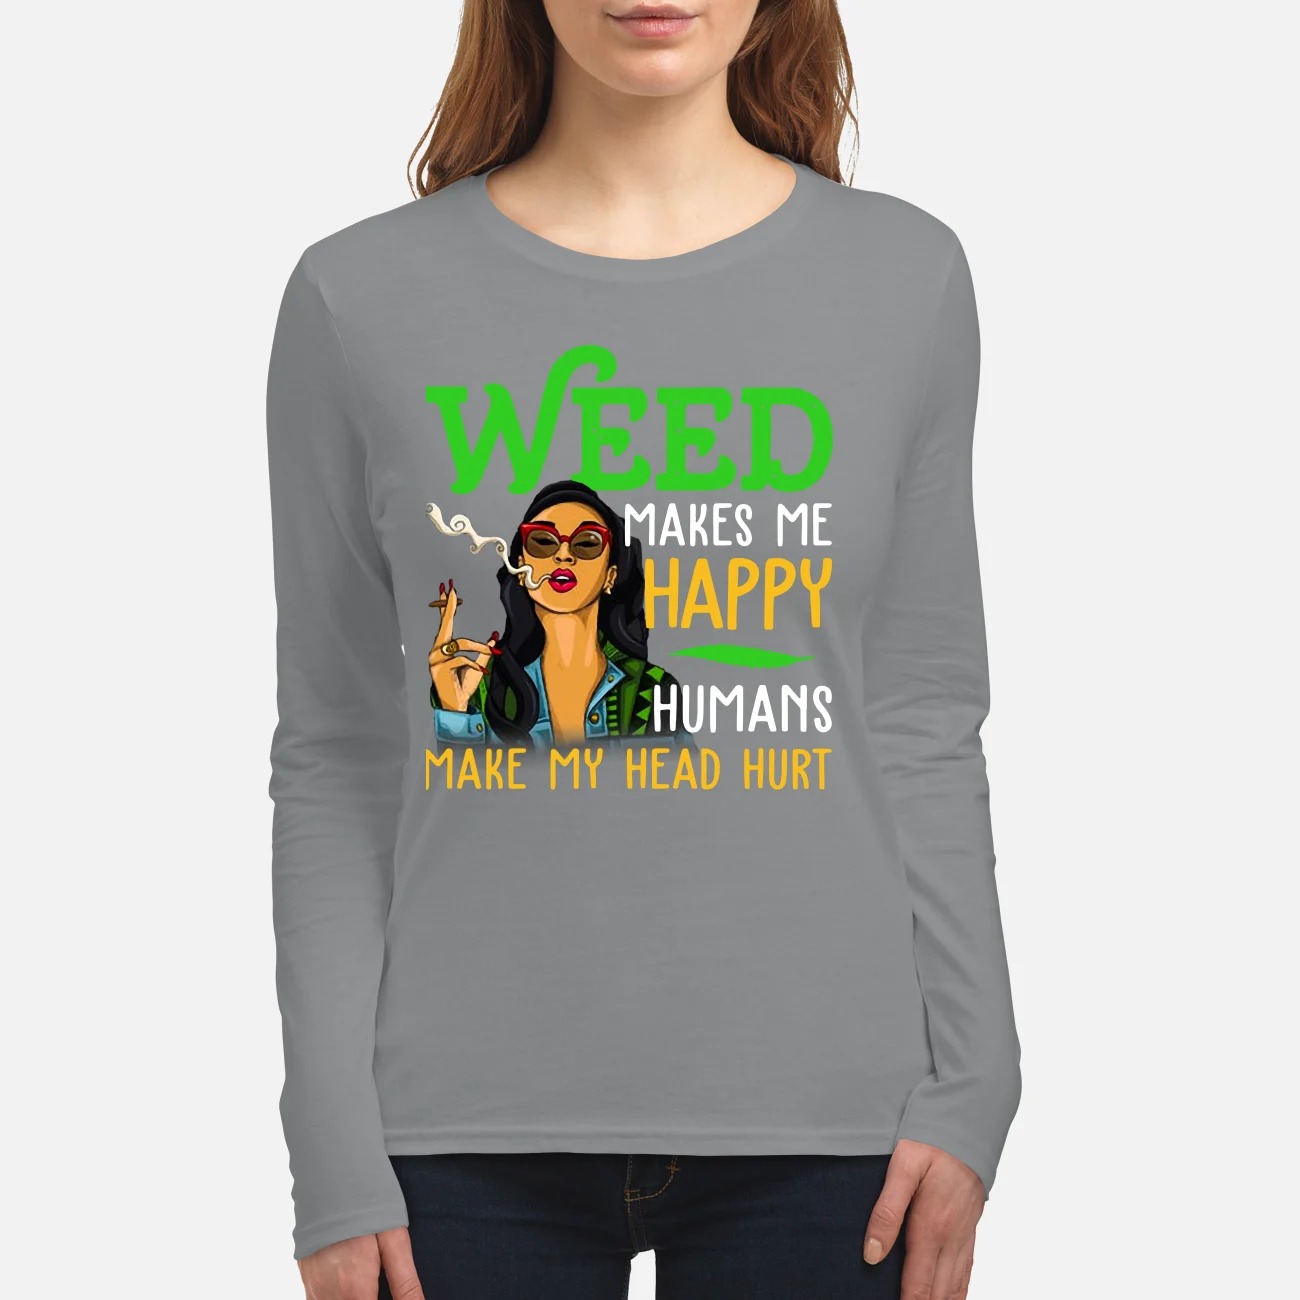 Weed makes me happy humans make my head hurt women's long sleeved shirt